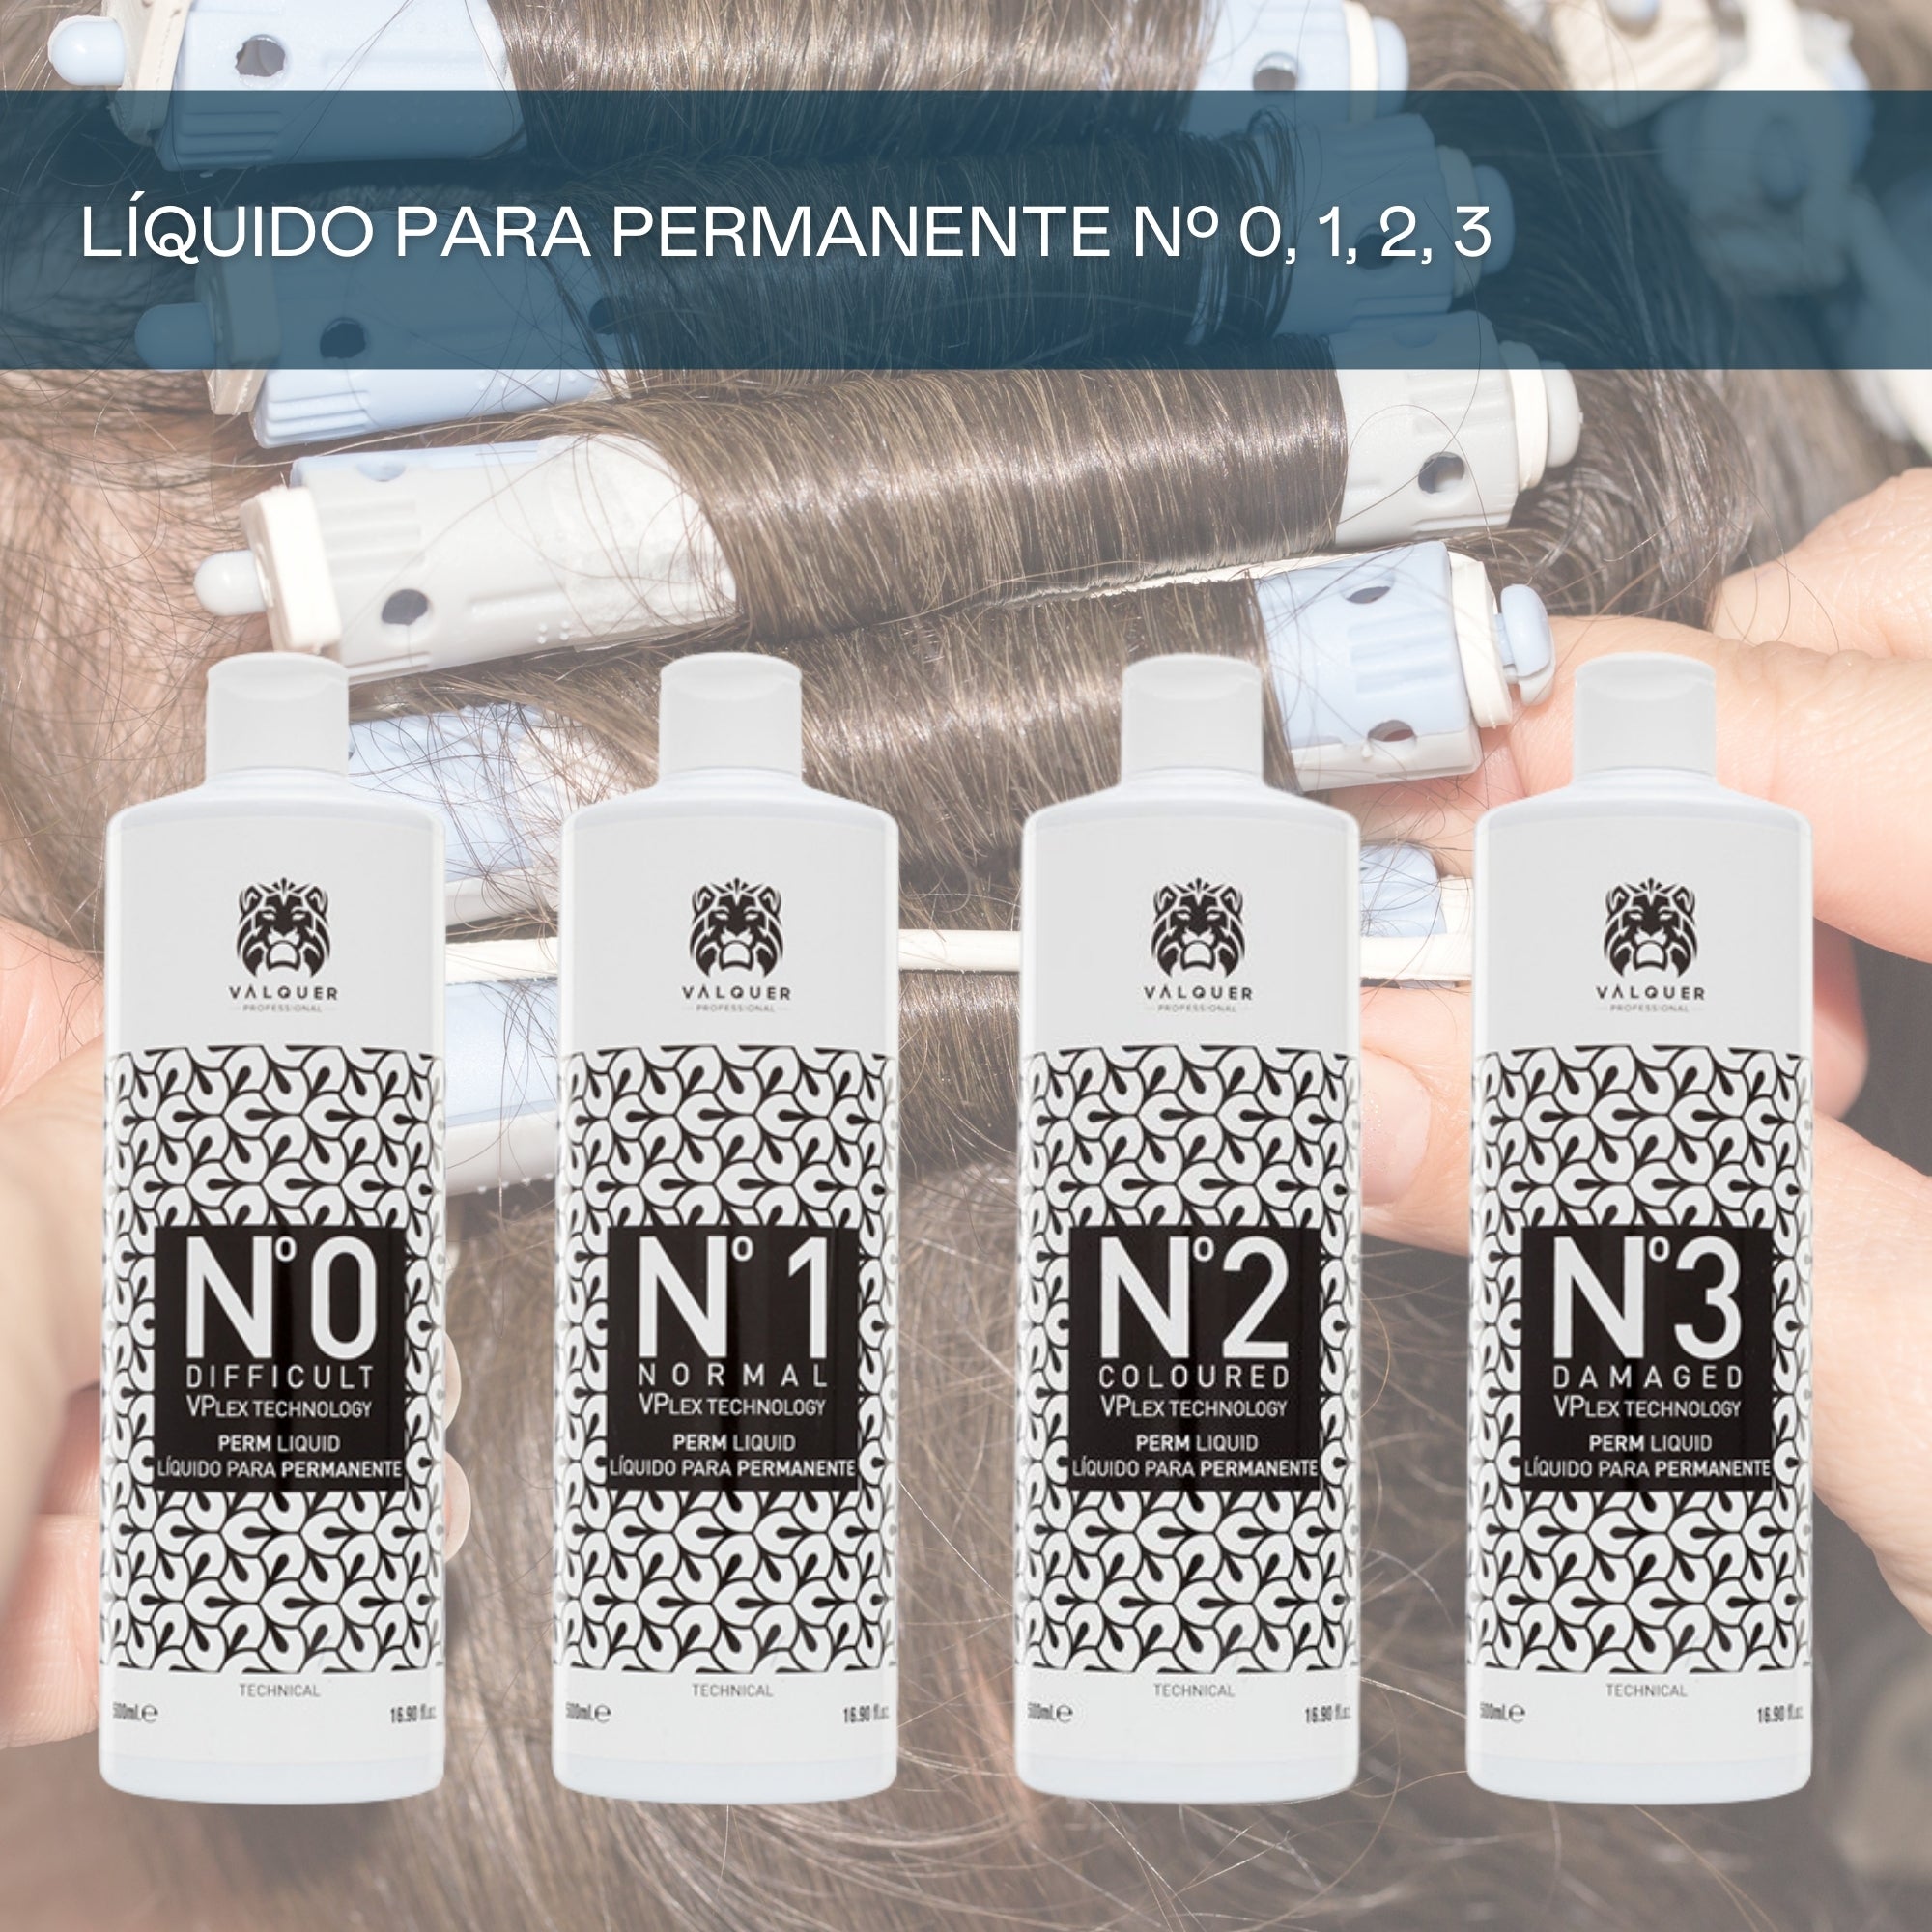 Liquid for permanent Nº3 (Damaged) - 500 ml